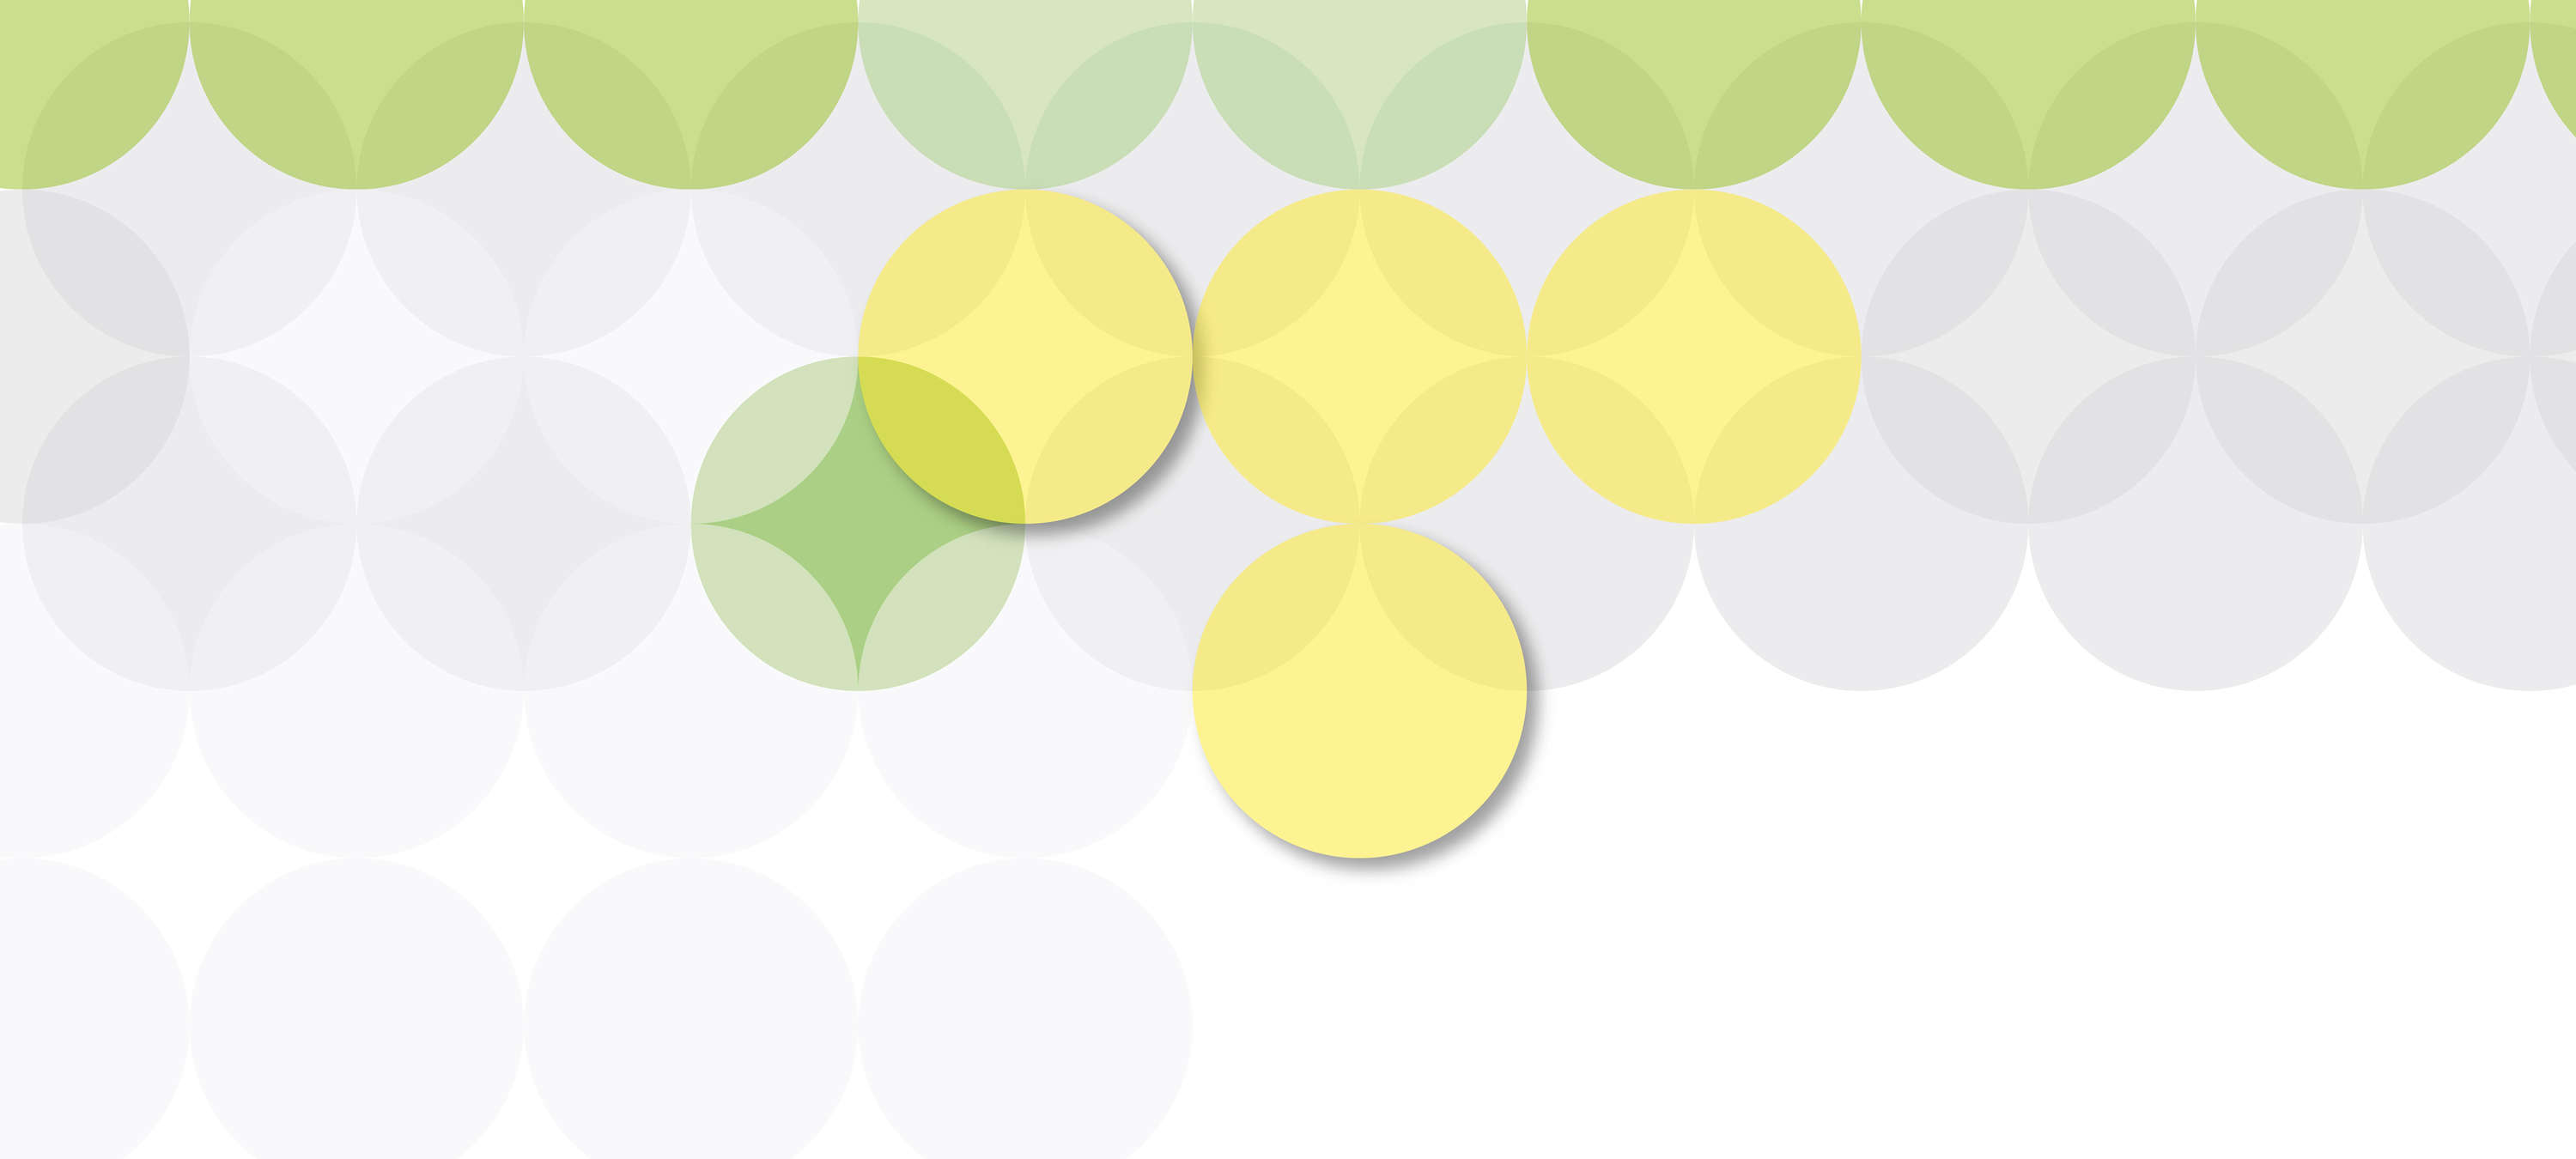             Papier peint design circulaire & motif graphique - jaune, vert, blanc
        